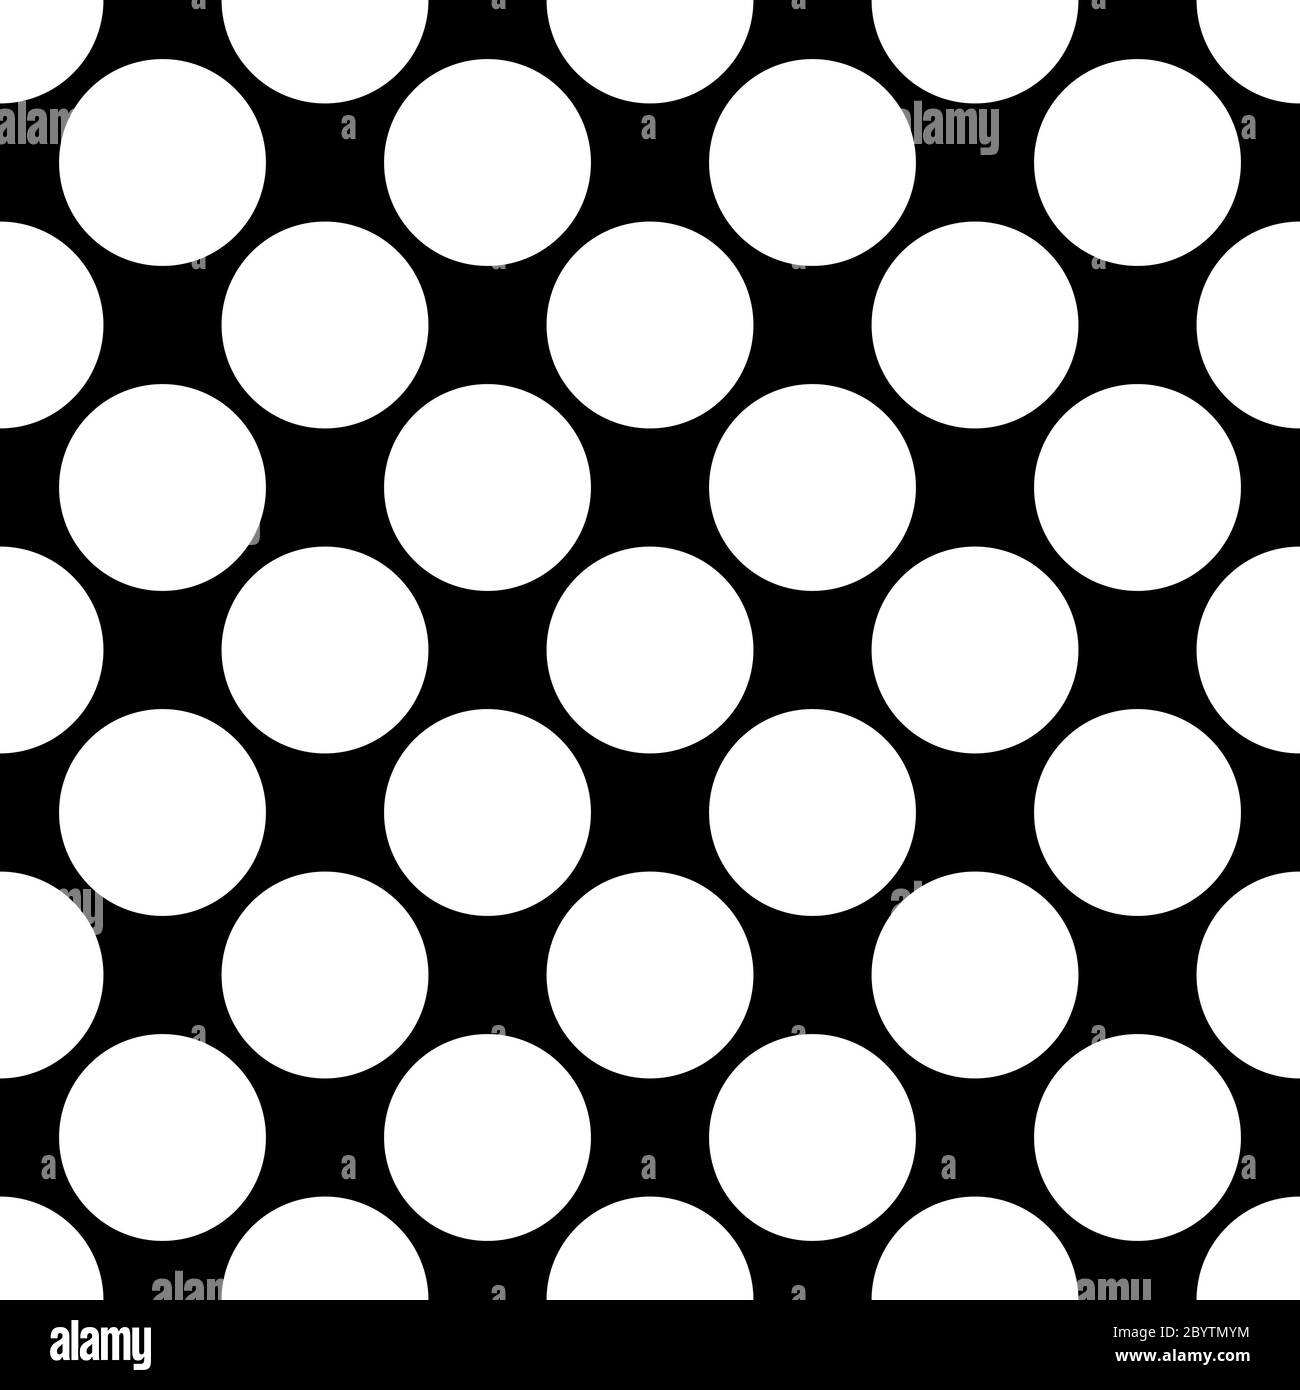 Seamless polka dot pattern. White dots on black background. Vector illustration. Stock Vector